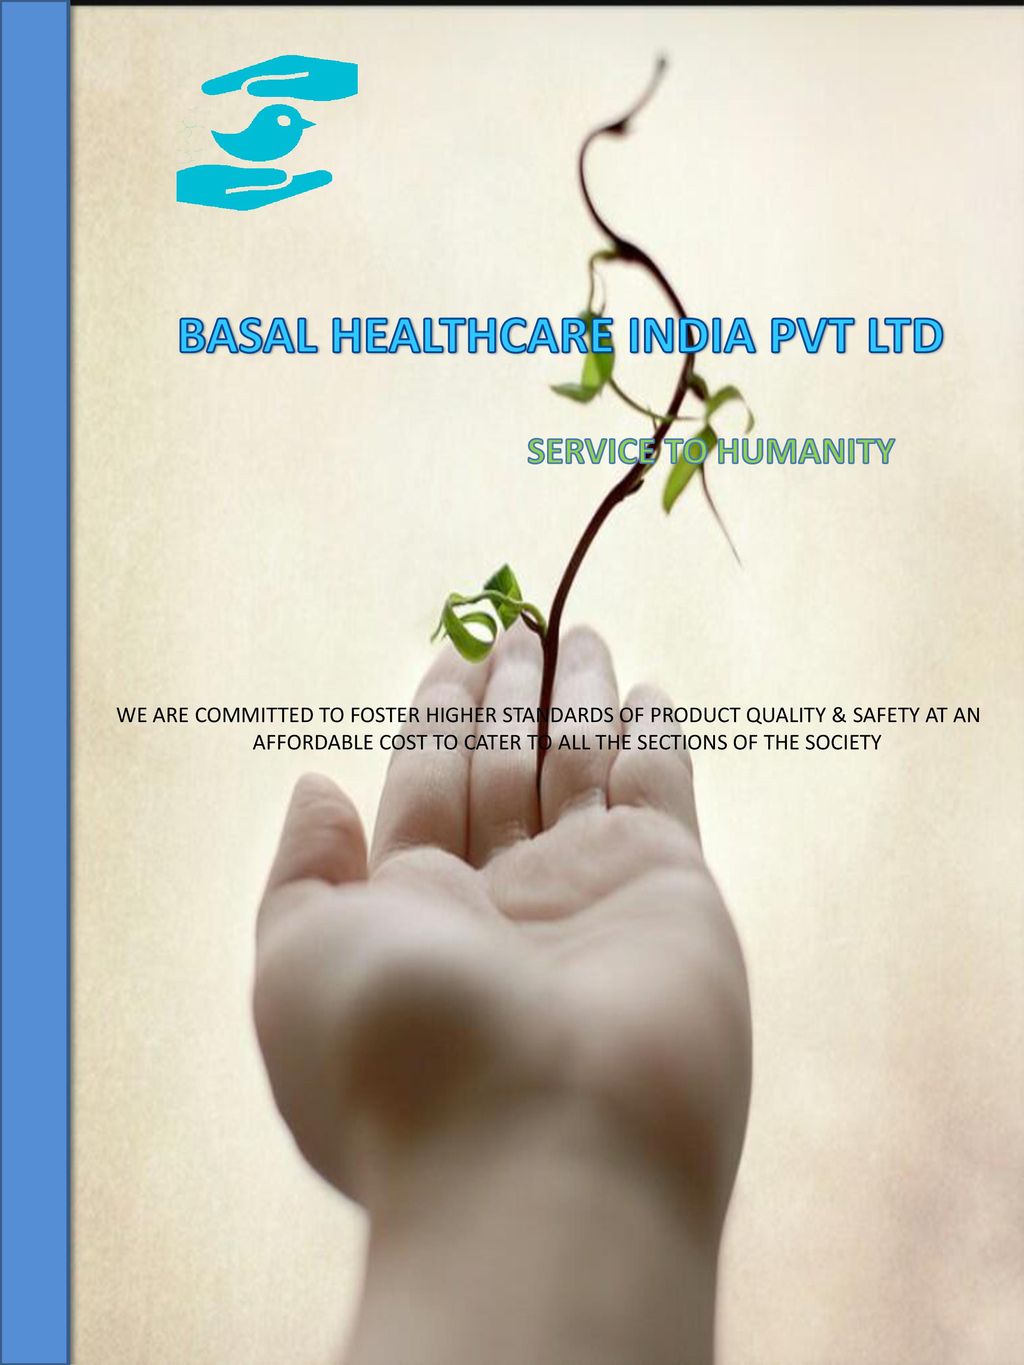 BASAL HEALTHCARE INDIA PVT LTD - ppt download